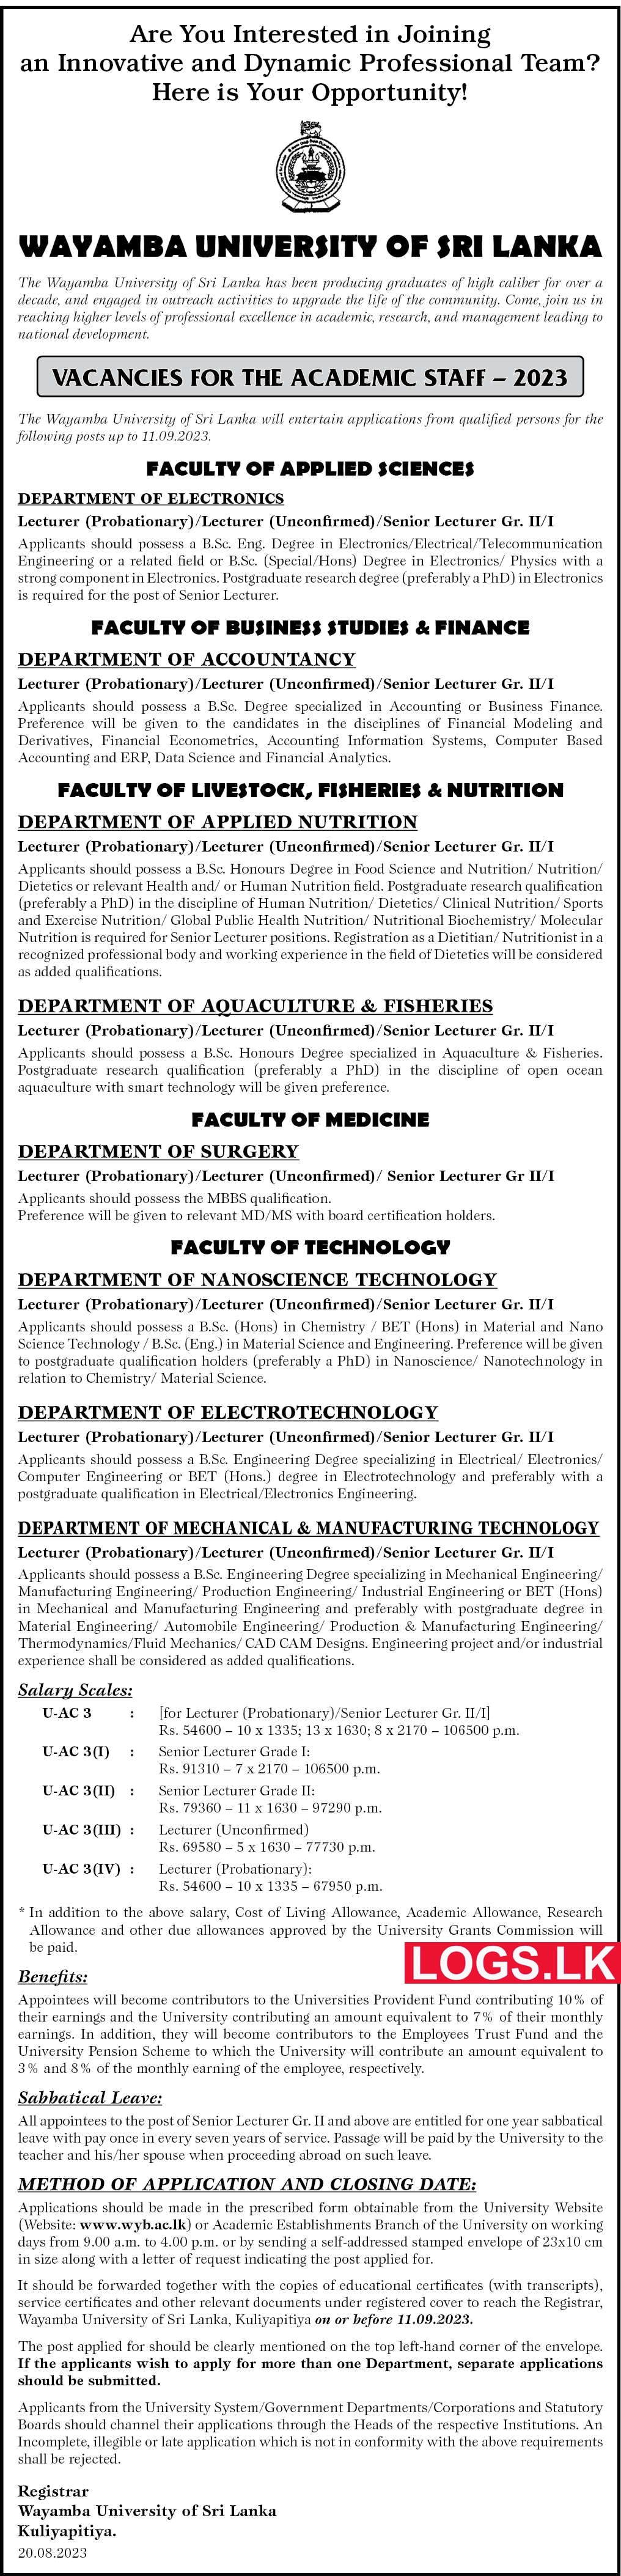 Wayamba University of Lanka Academic Staff Vacancies 2023 Application Form